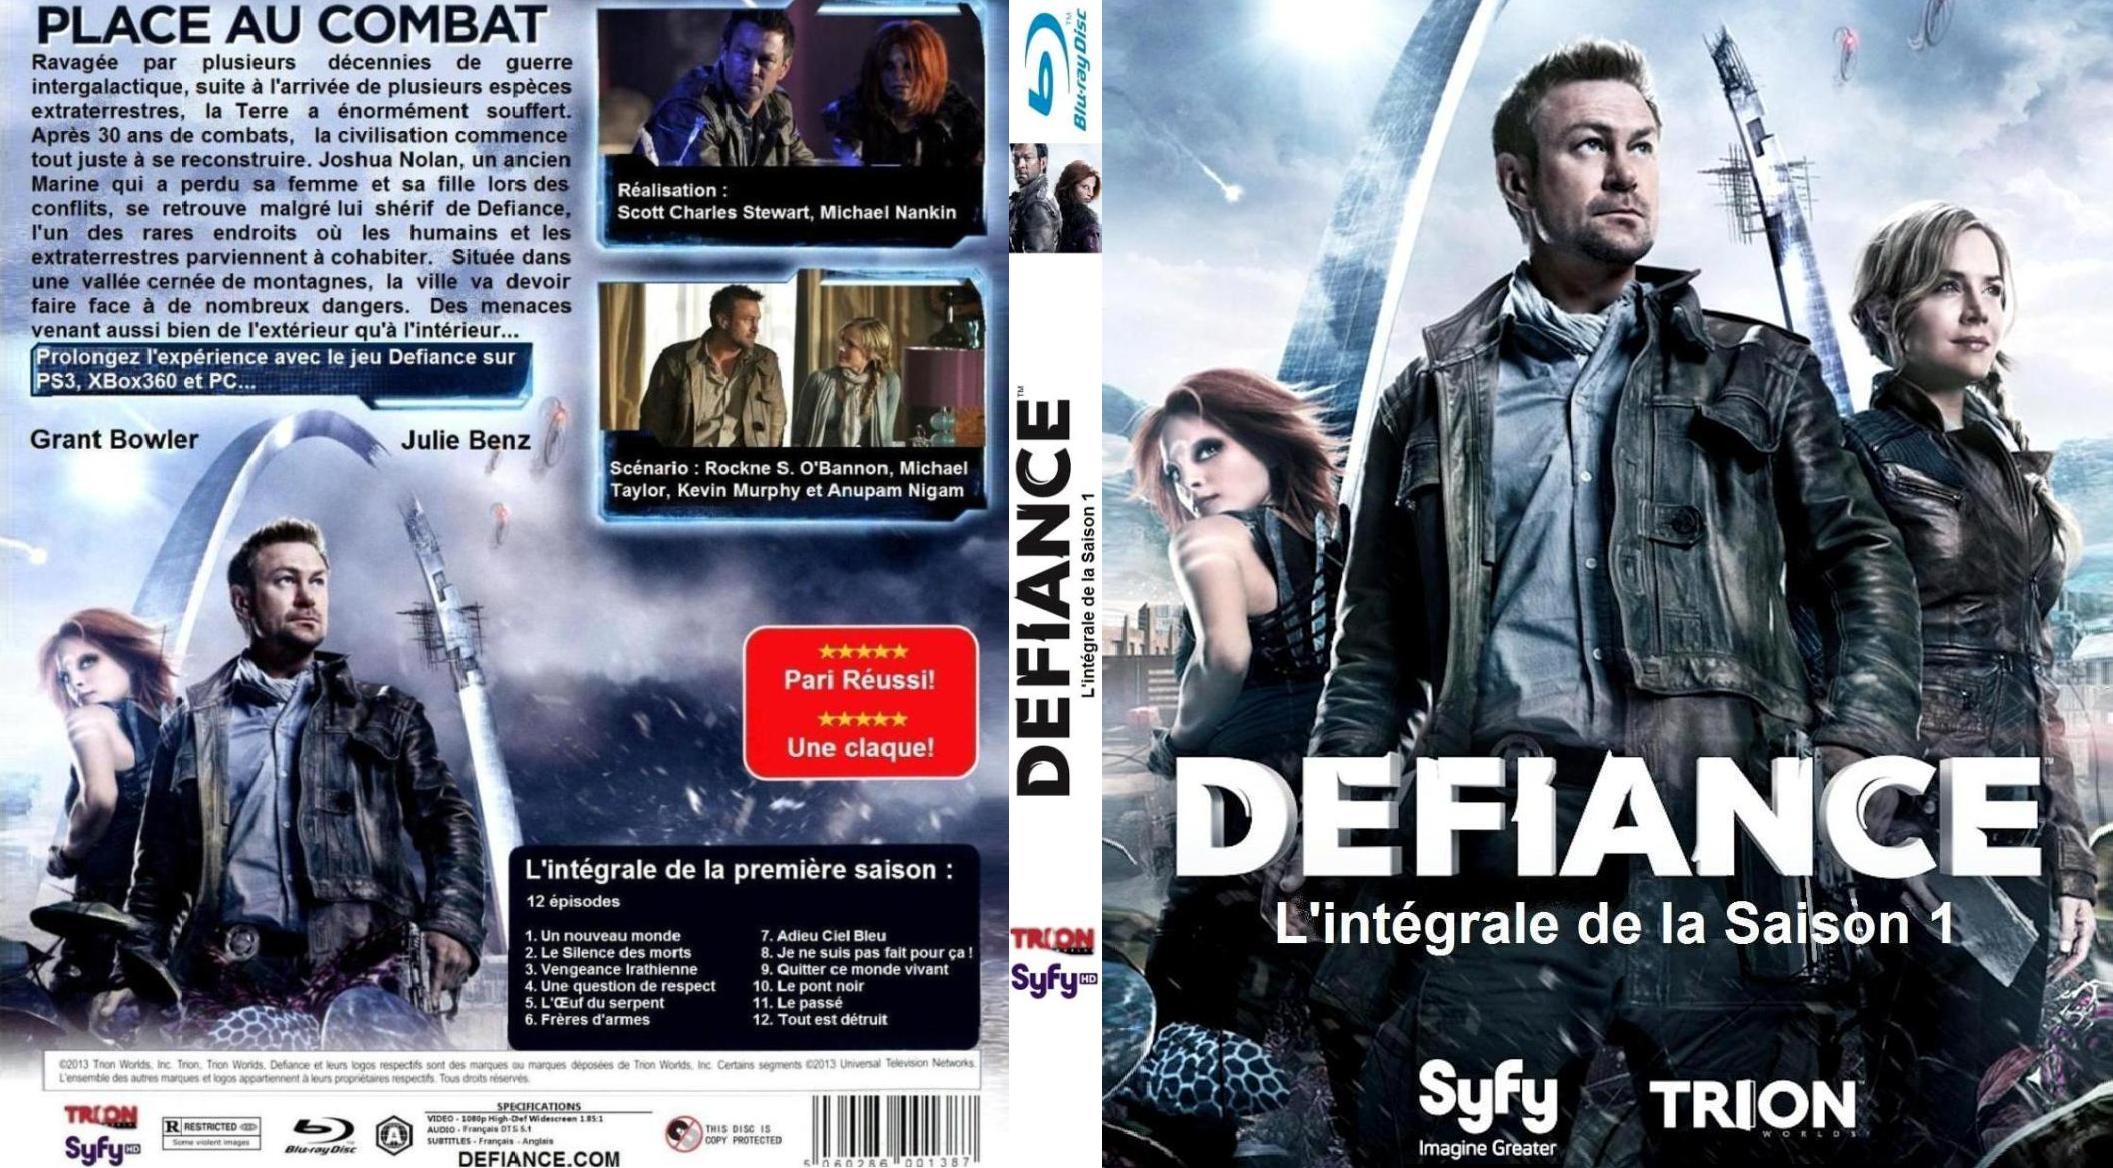 Jaquette DVD Defiance Saison 1 custom (BLU-RAY)